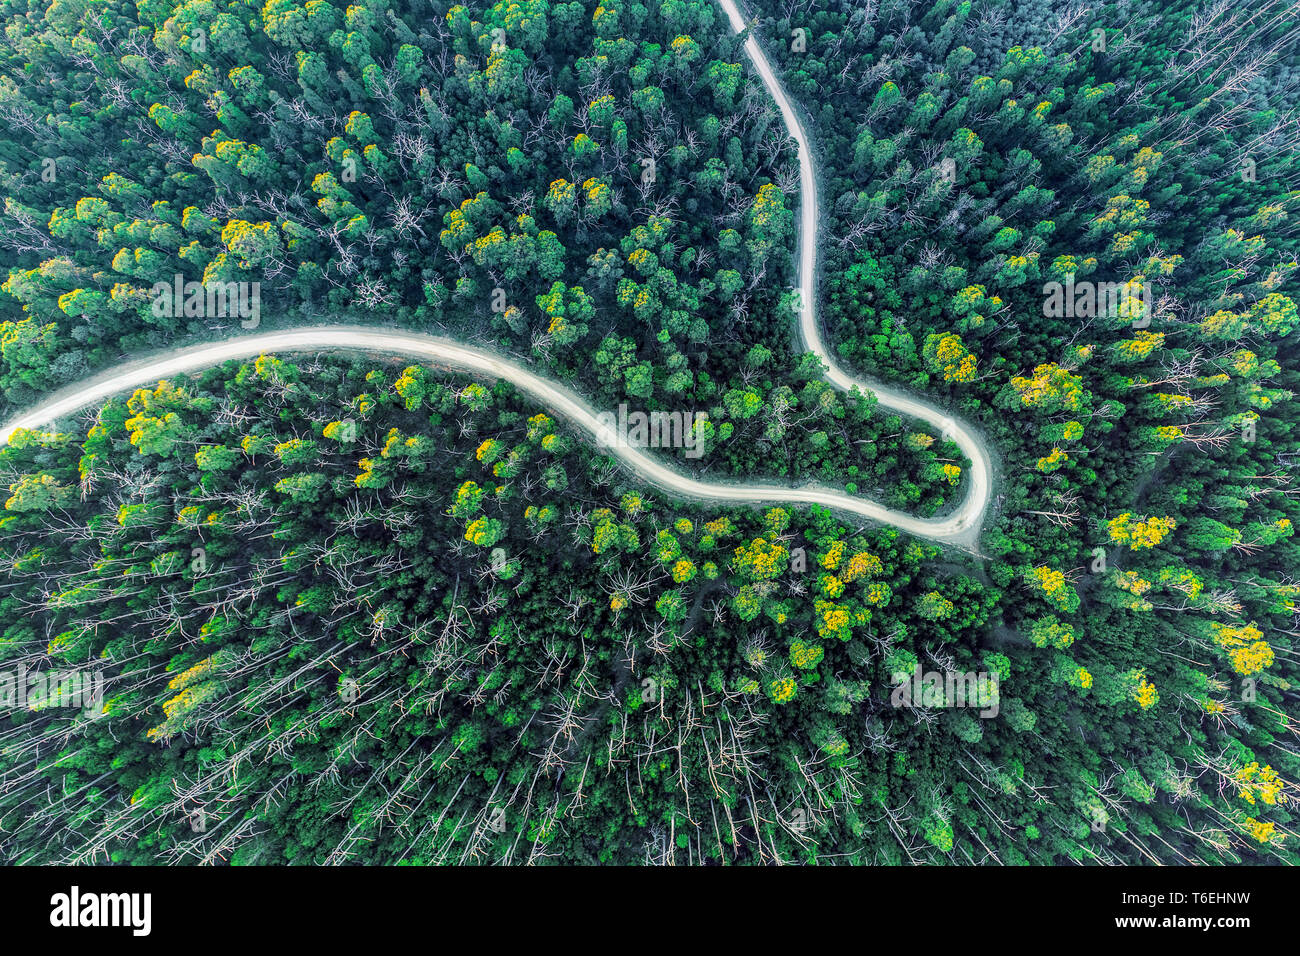 Vista superior de flexión de la carretera a través del bosque de eucaliptos al atardecer Foto de stock